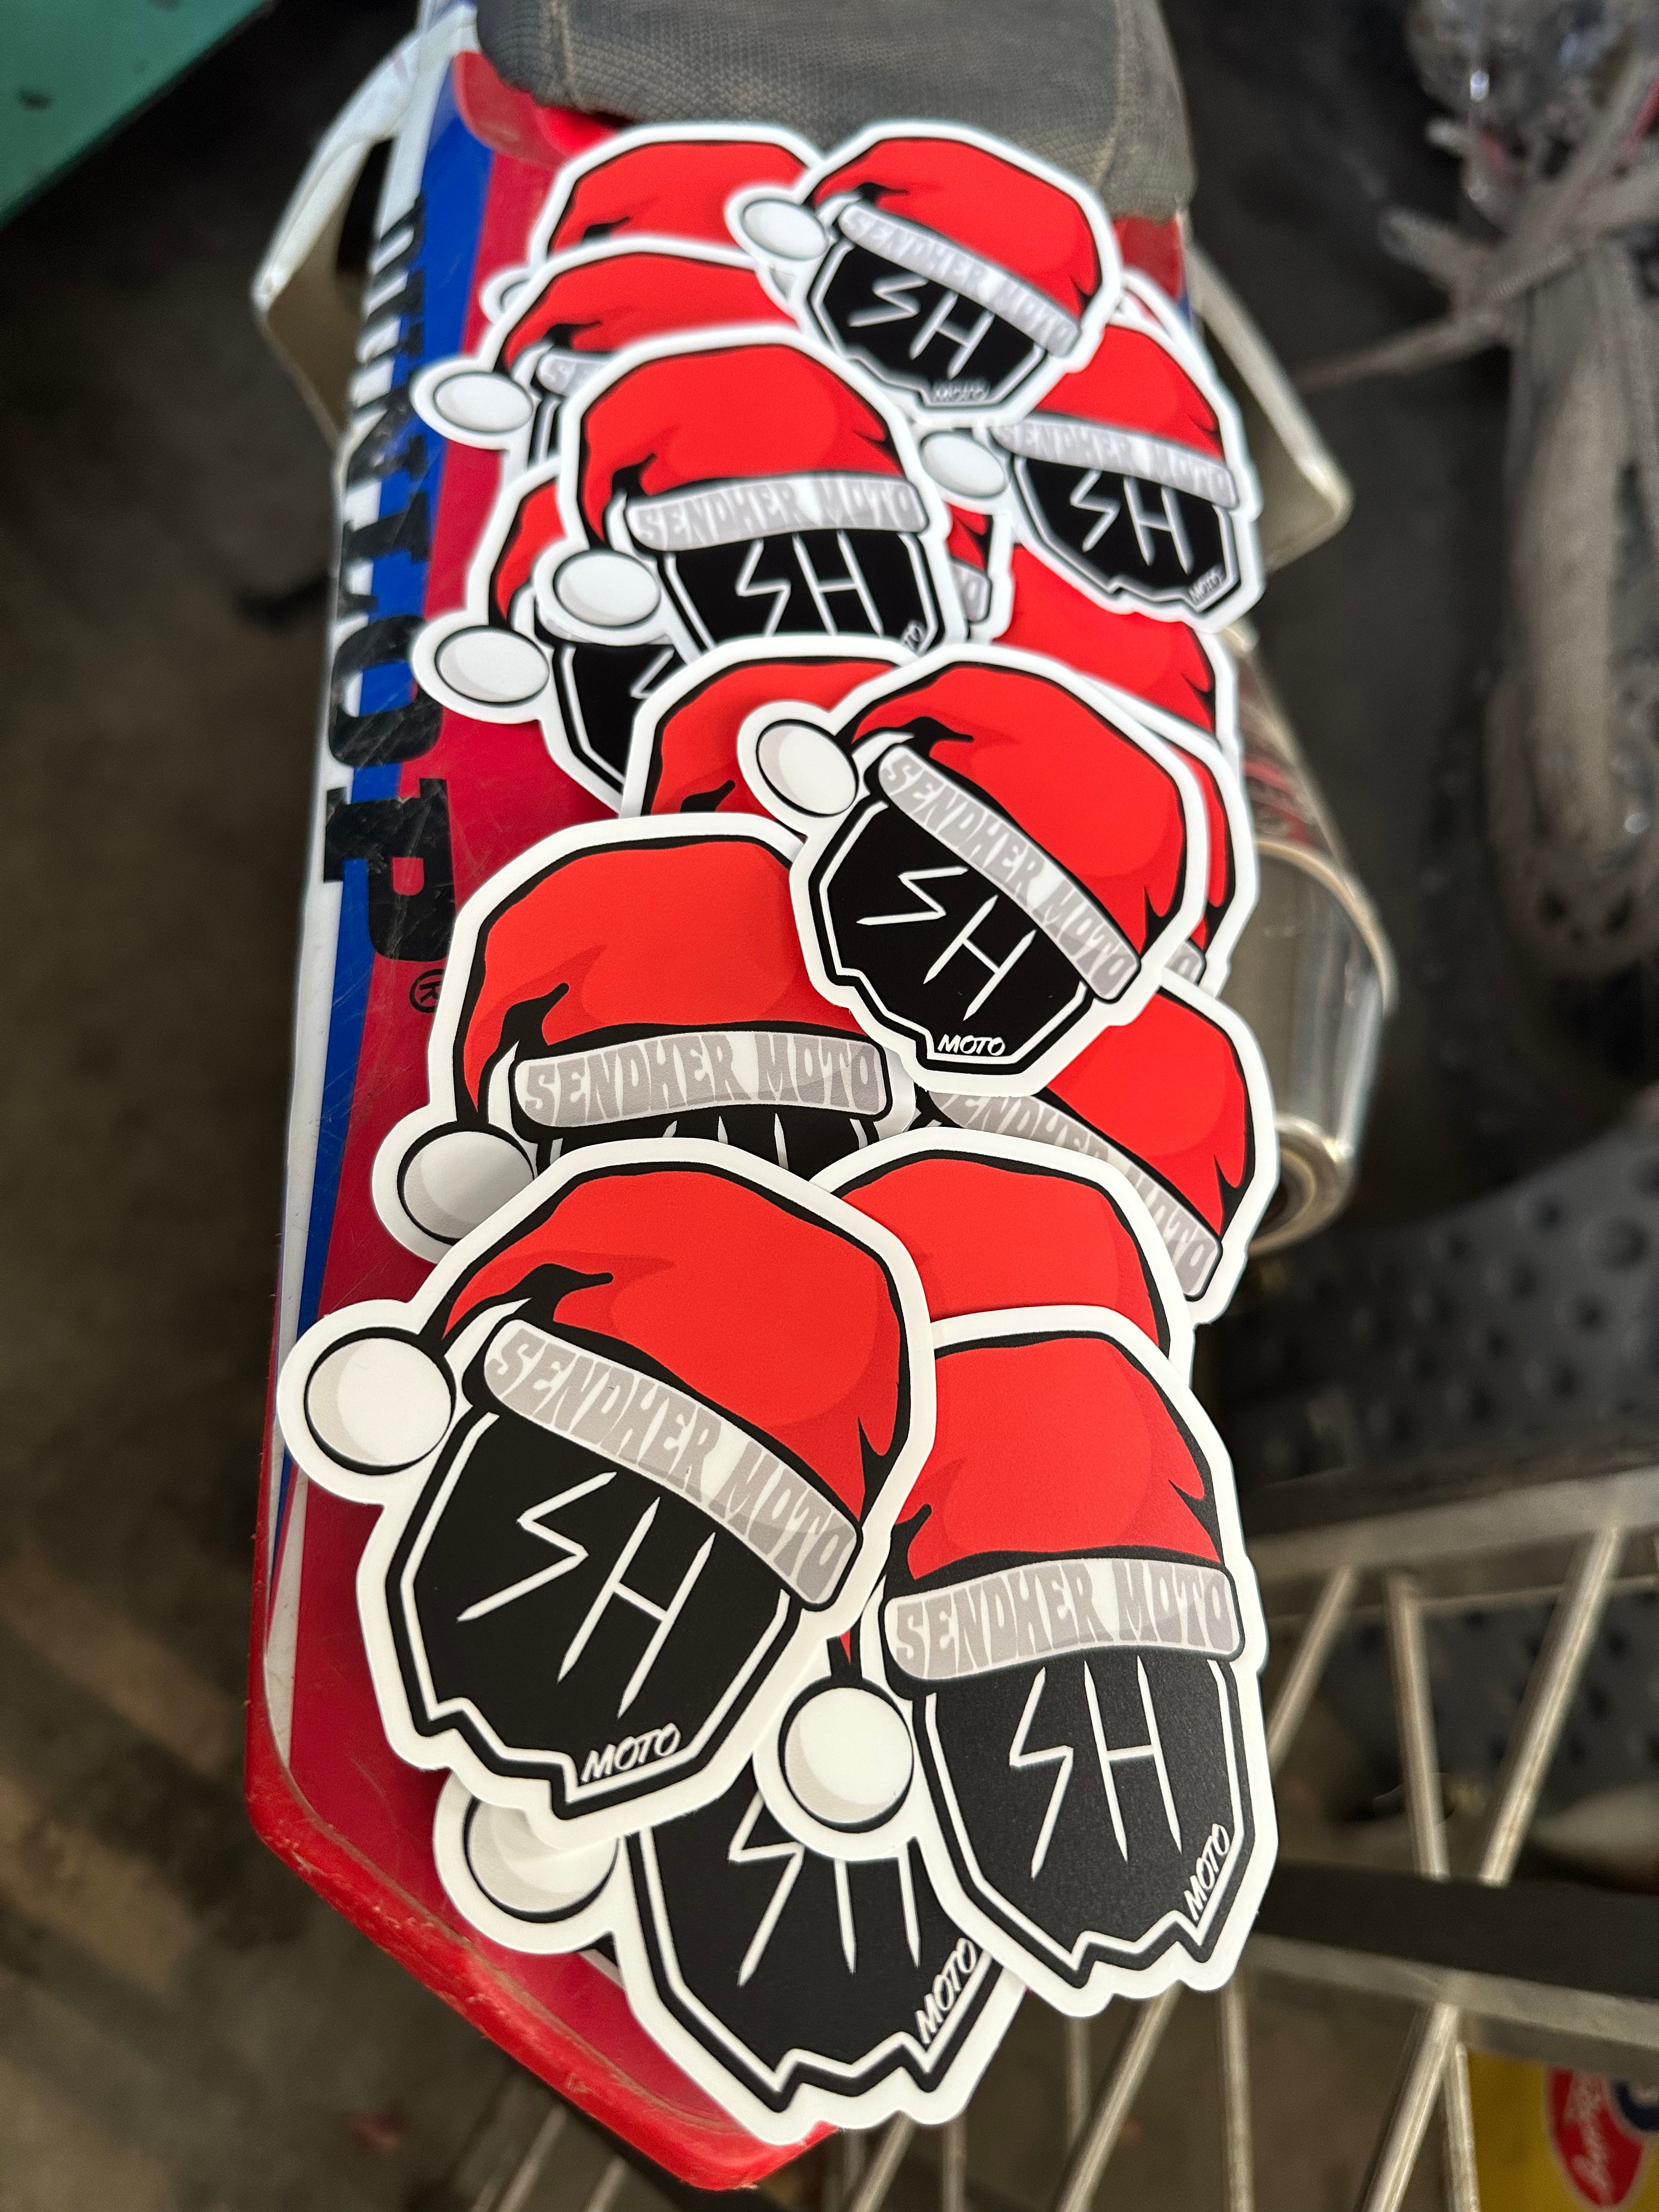 Sendher Moto Christmas Sticker